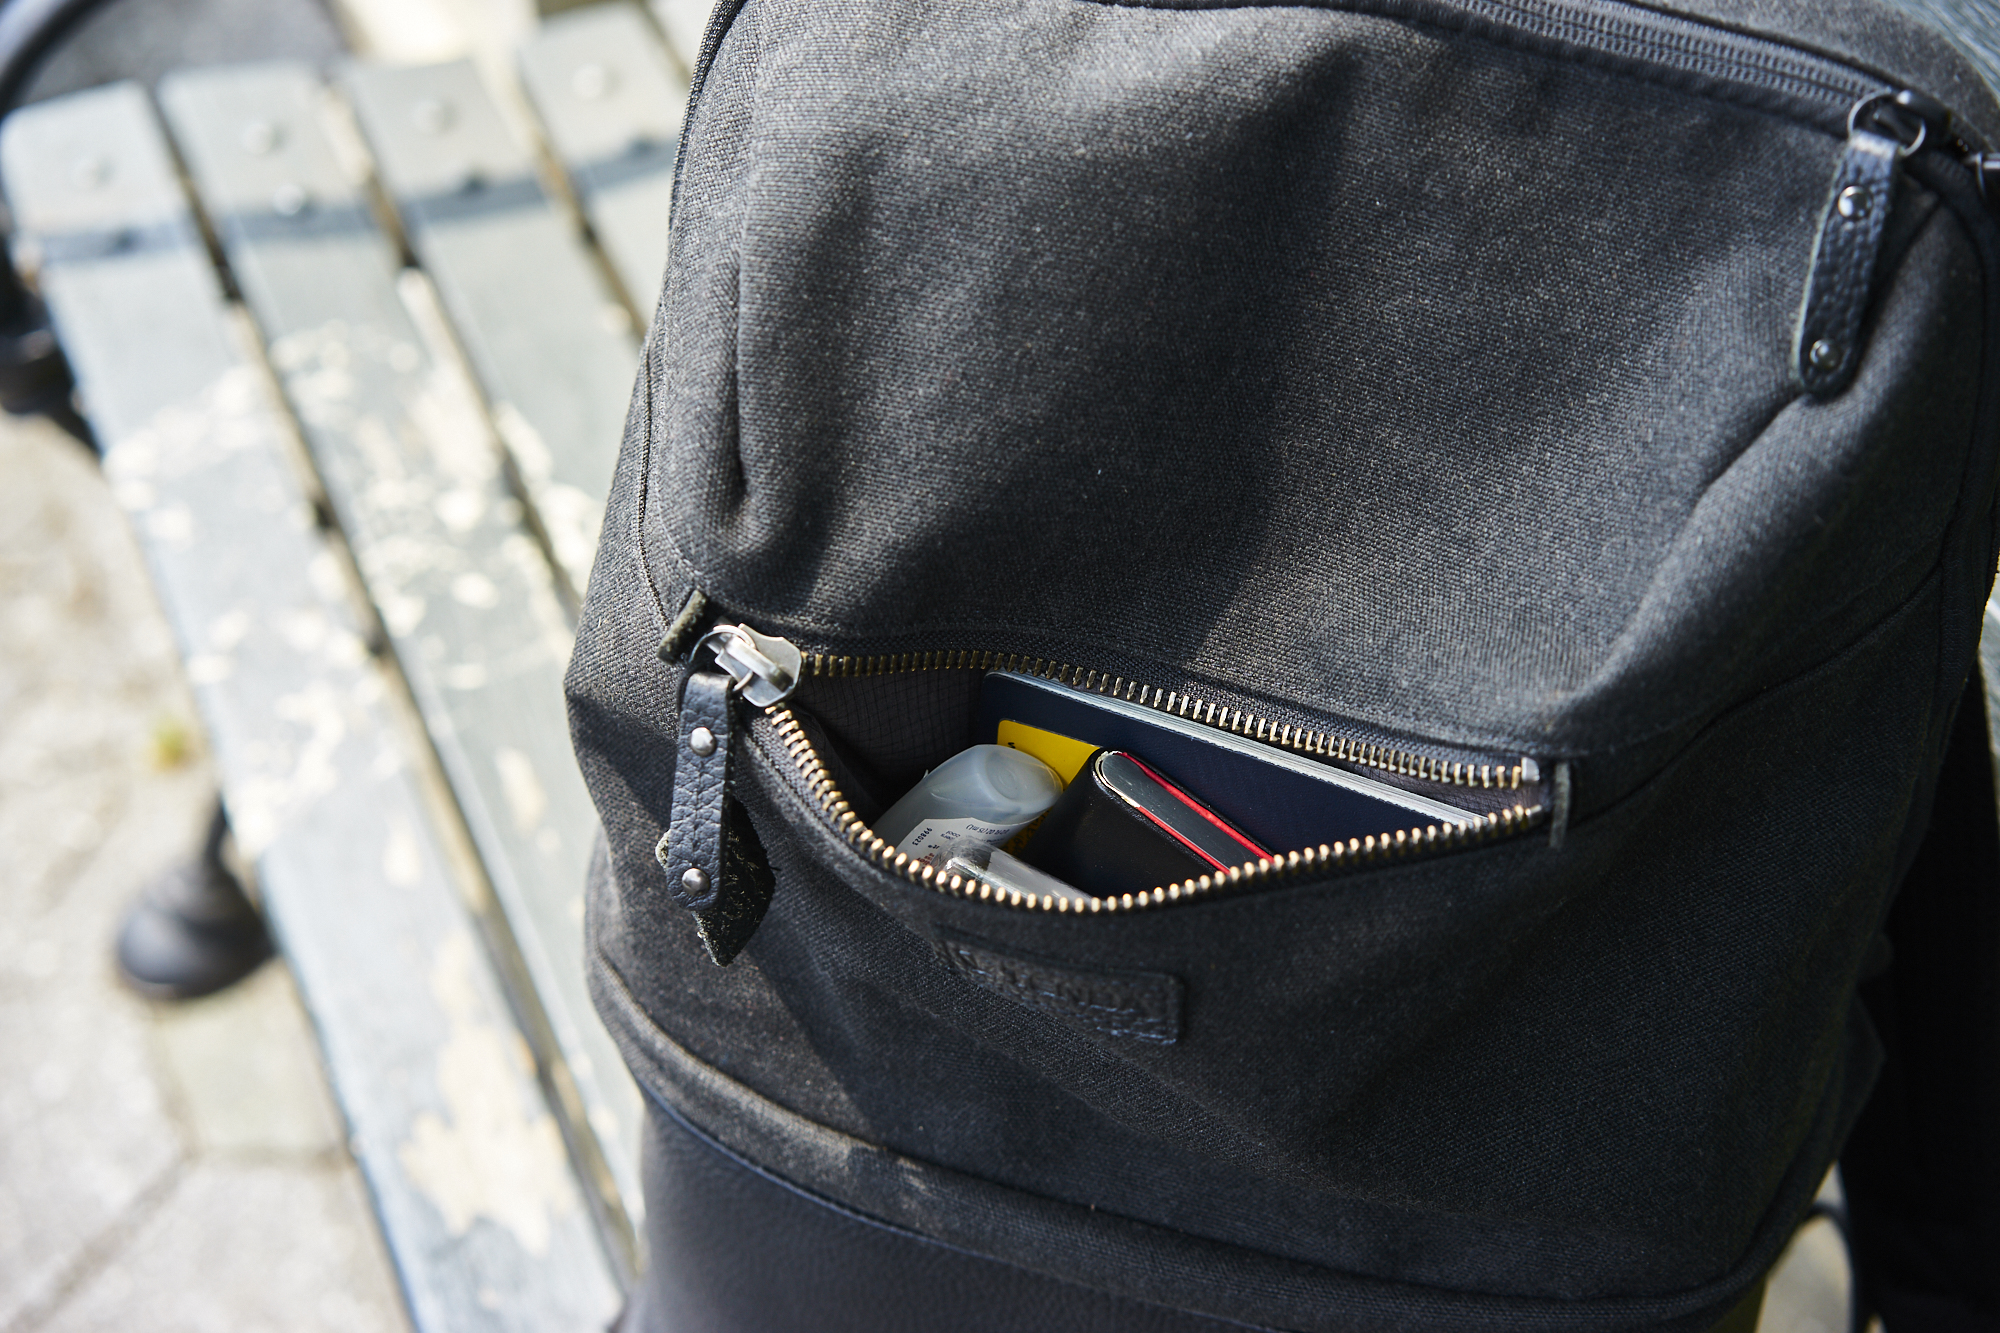 Camera Bag Review: Tenba Cooper DSLR Backpack (For the City Dweller)